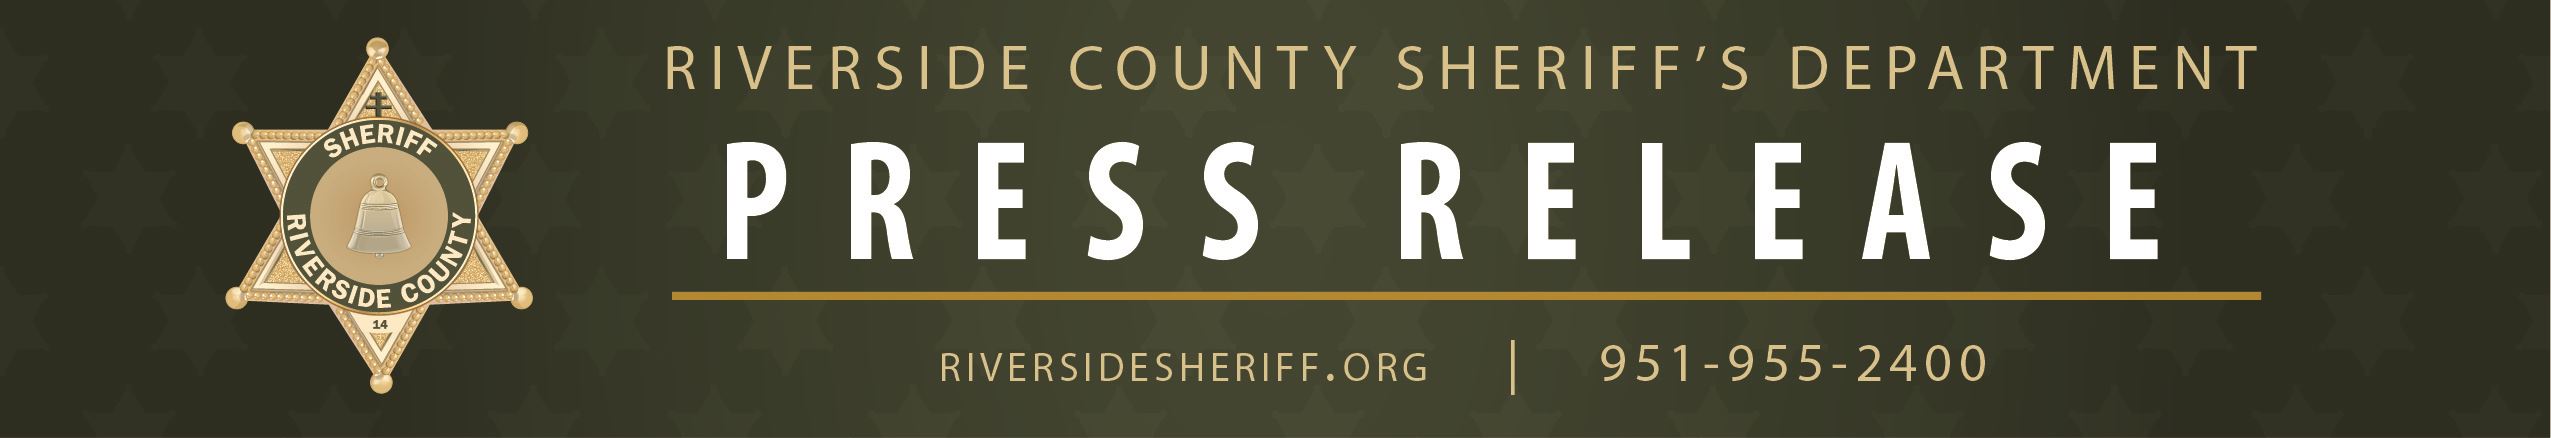 Riverside County Sheriff's Department Press Release